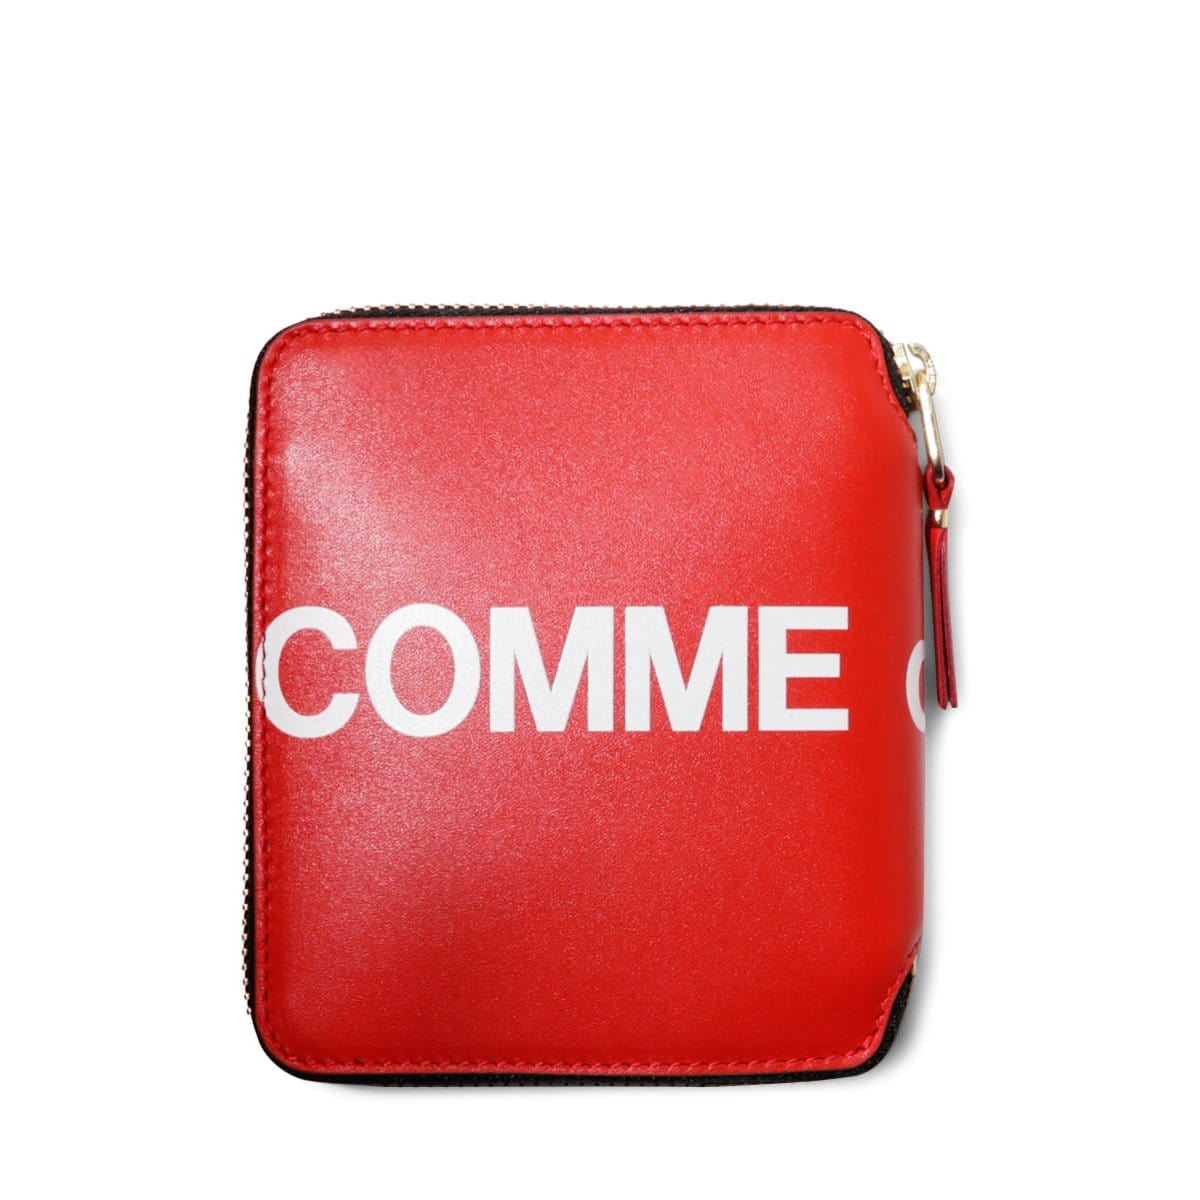 Comme Des Garçons Wallet Bags & Accessories RED / O/S HUGE LOGO WALLET